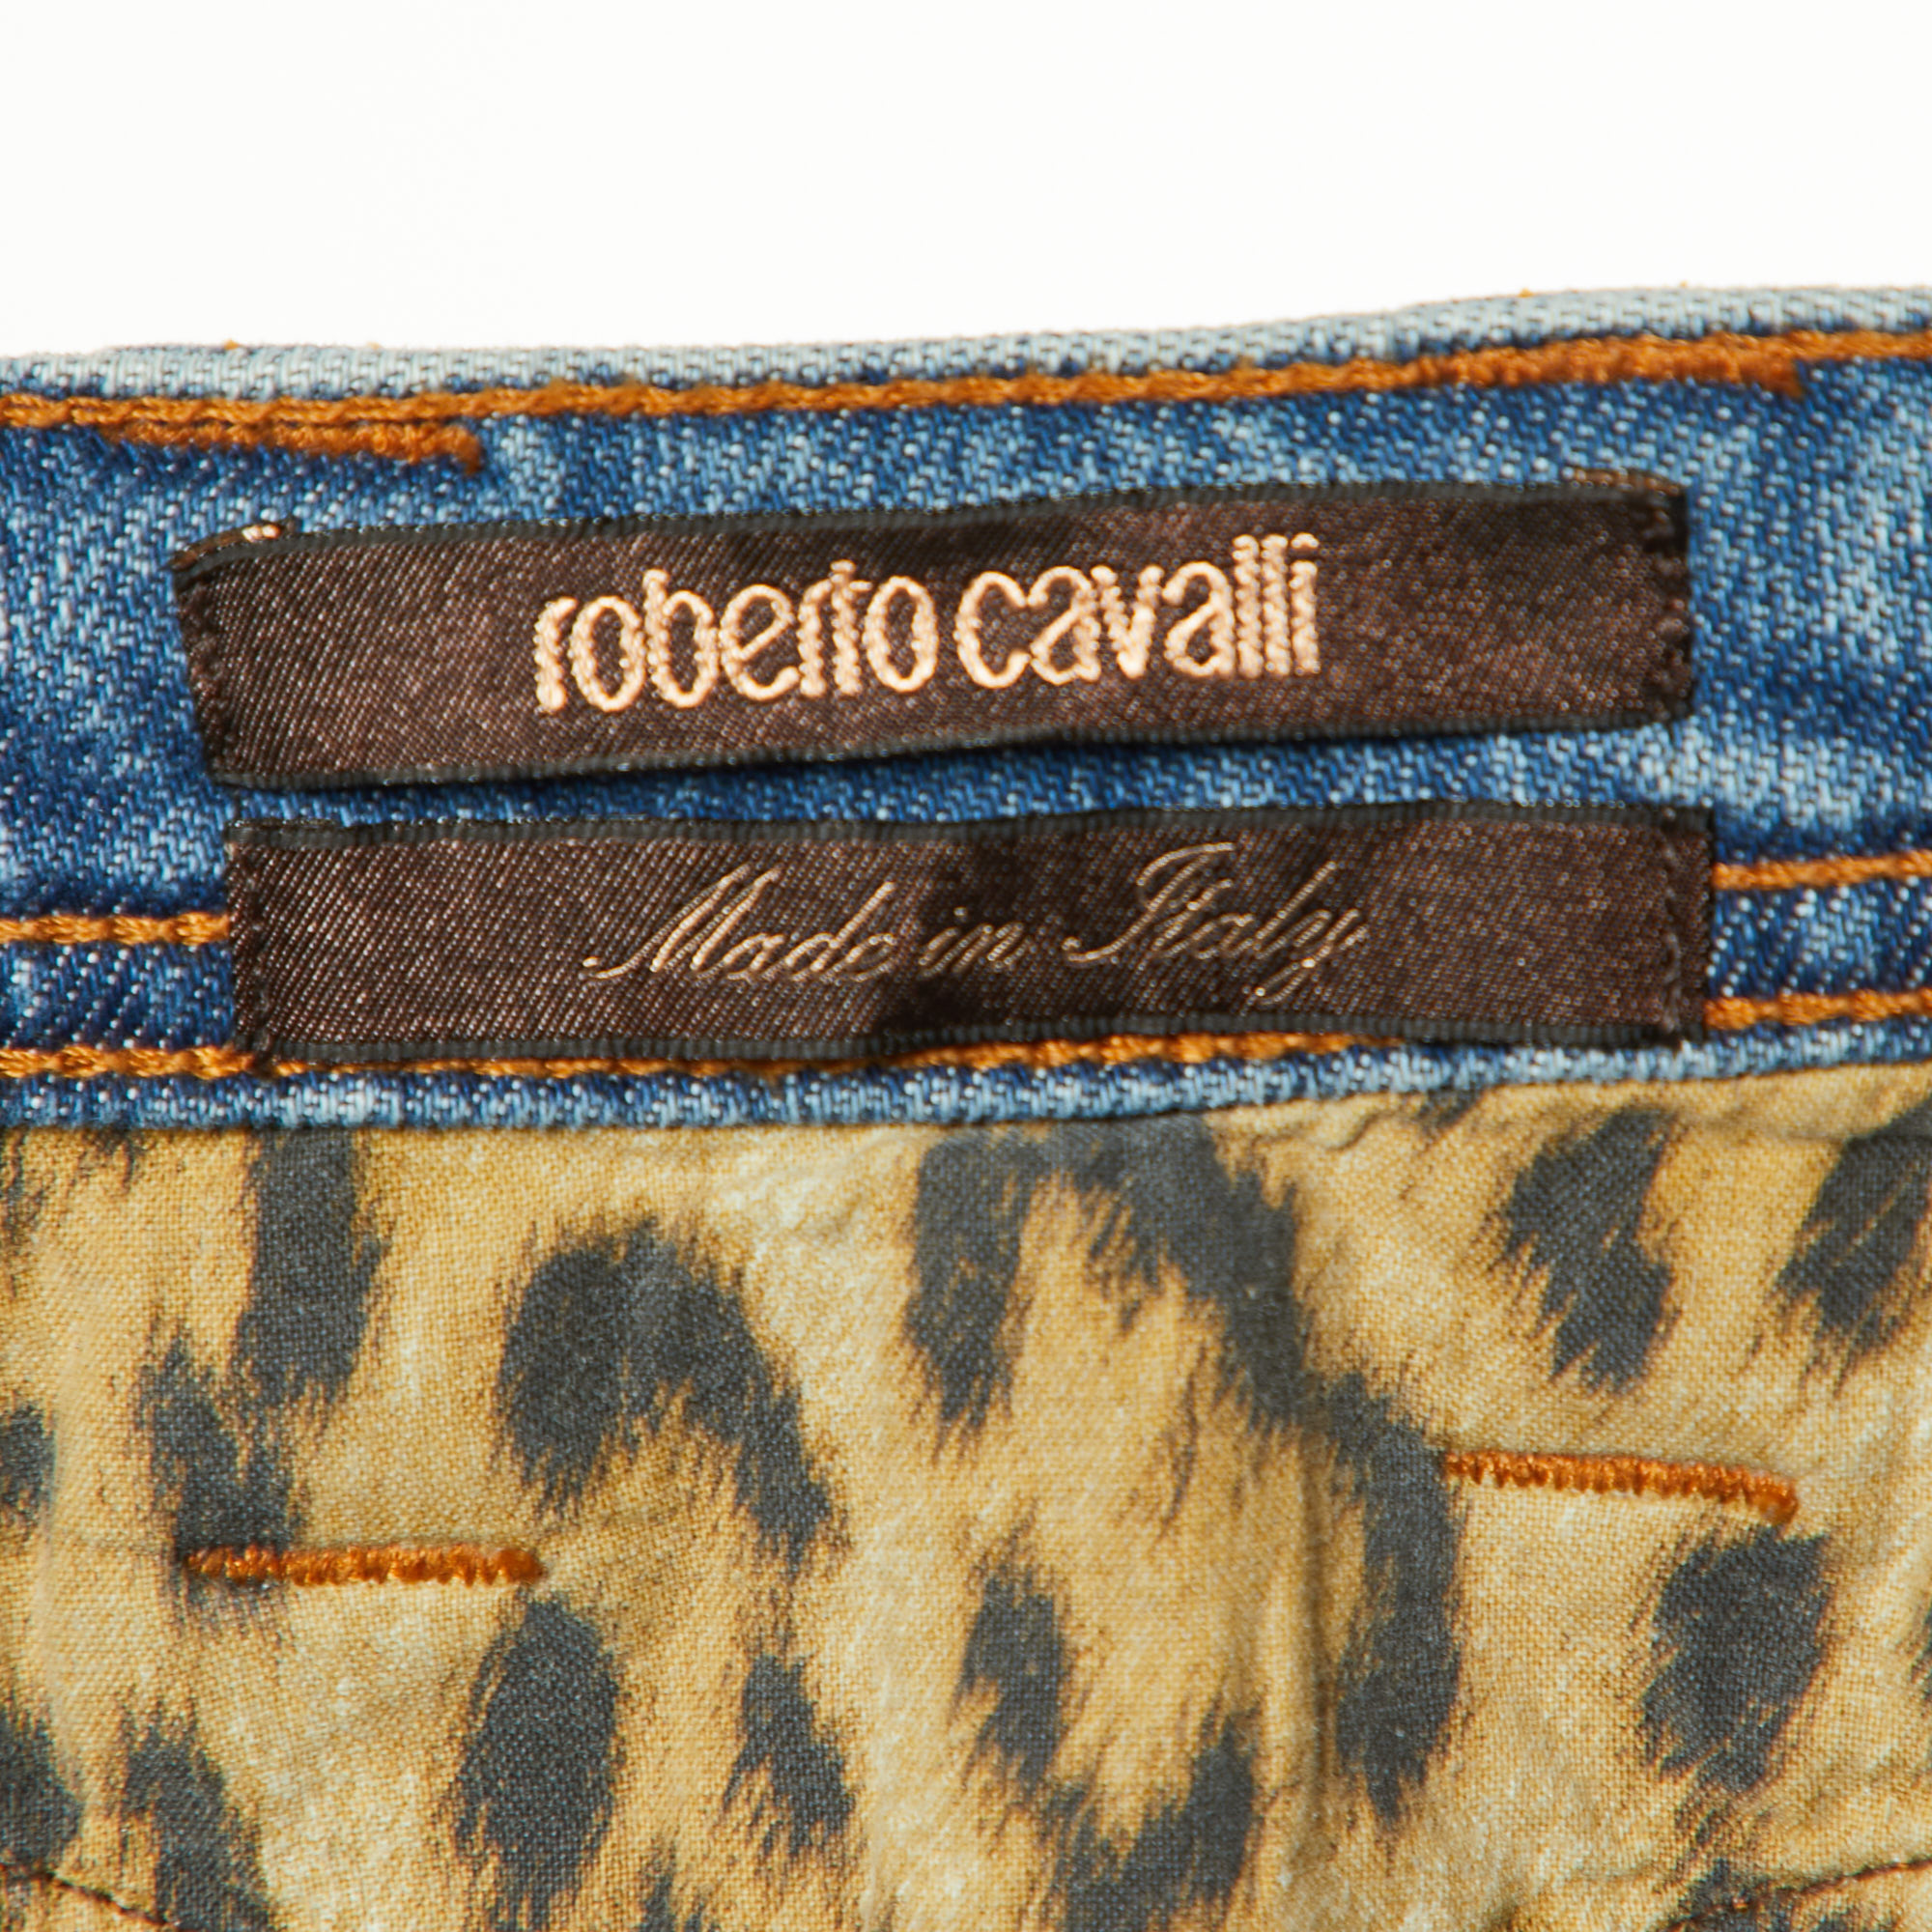 Roberto Cavalli Blue Denim High Waist Flared Jeans M Waist 28